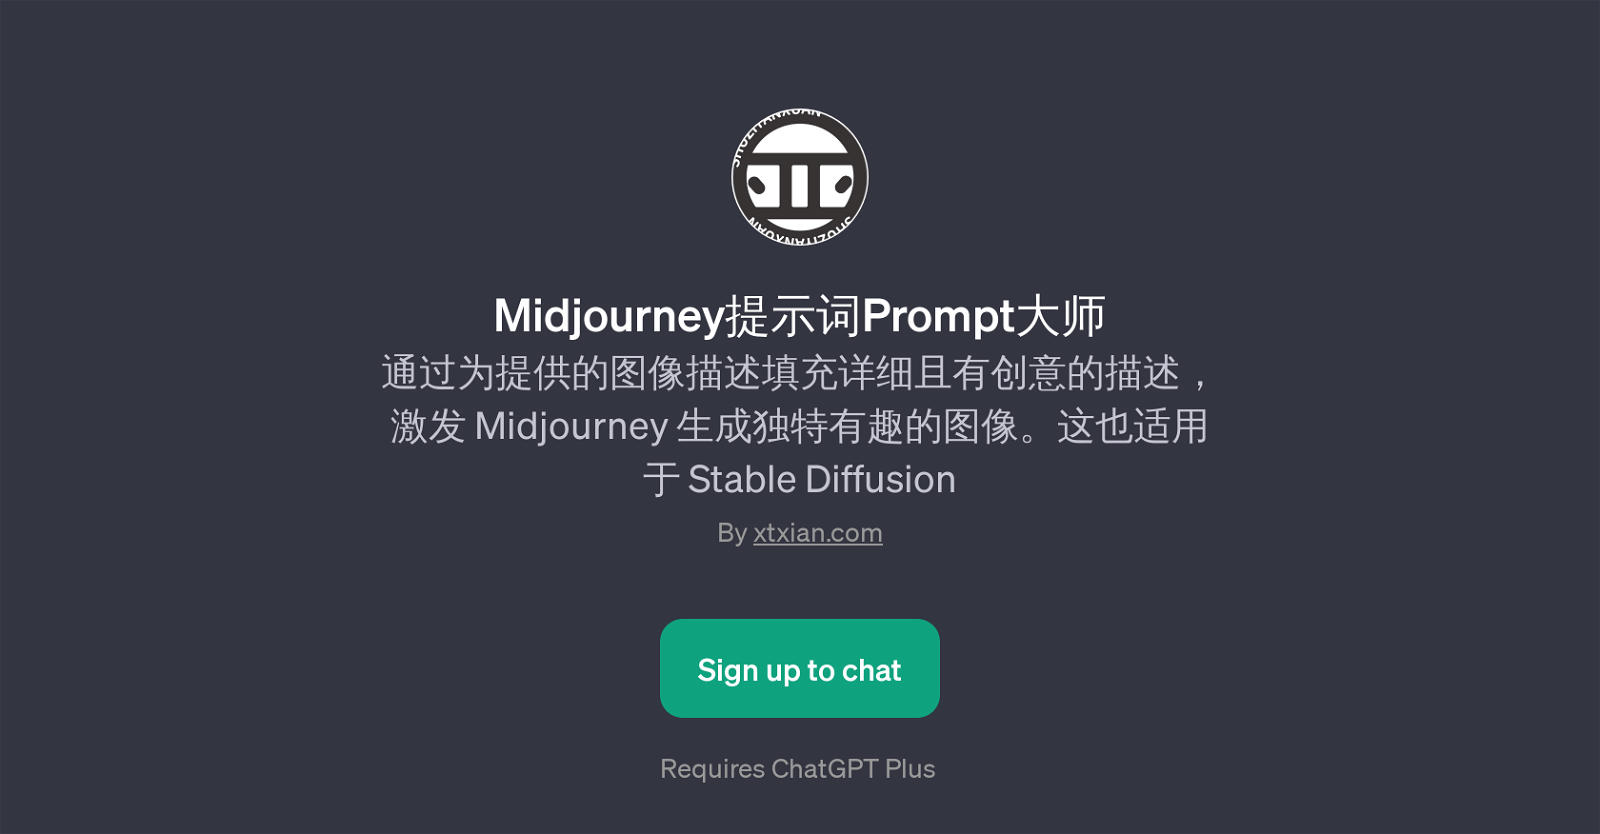 MidjourneyPrompt website